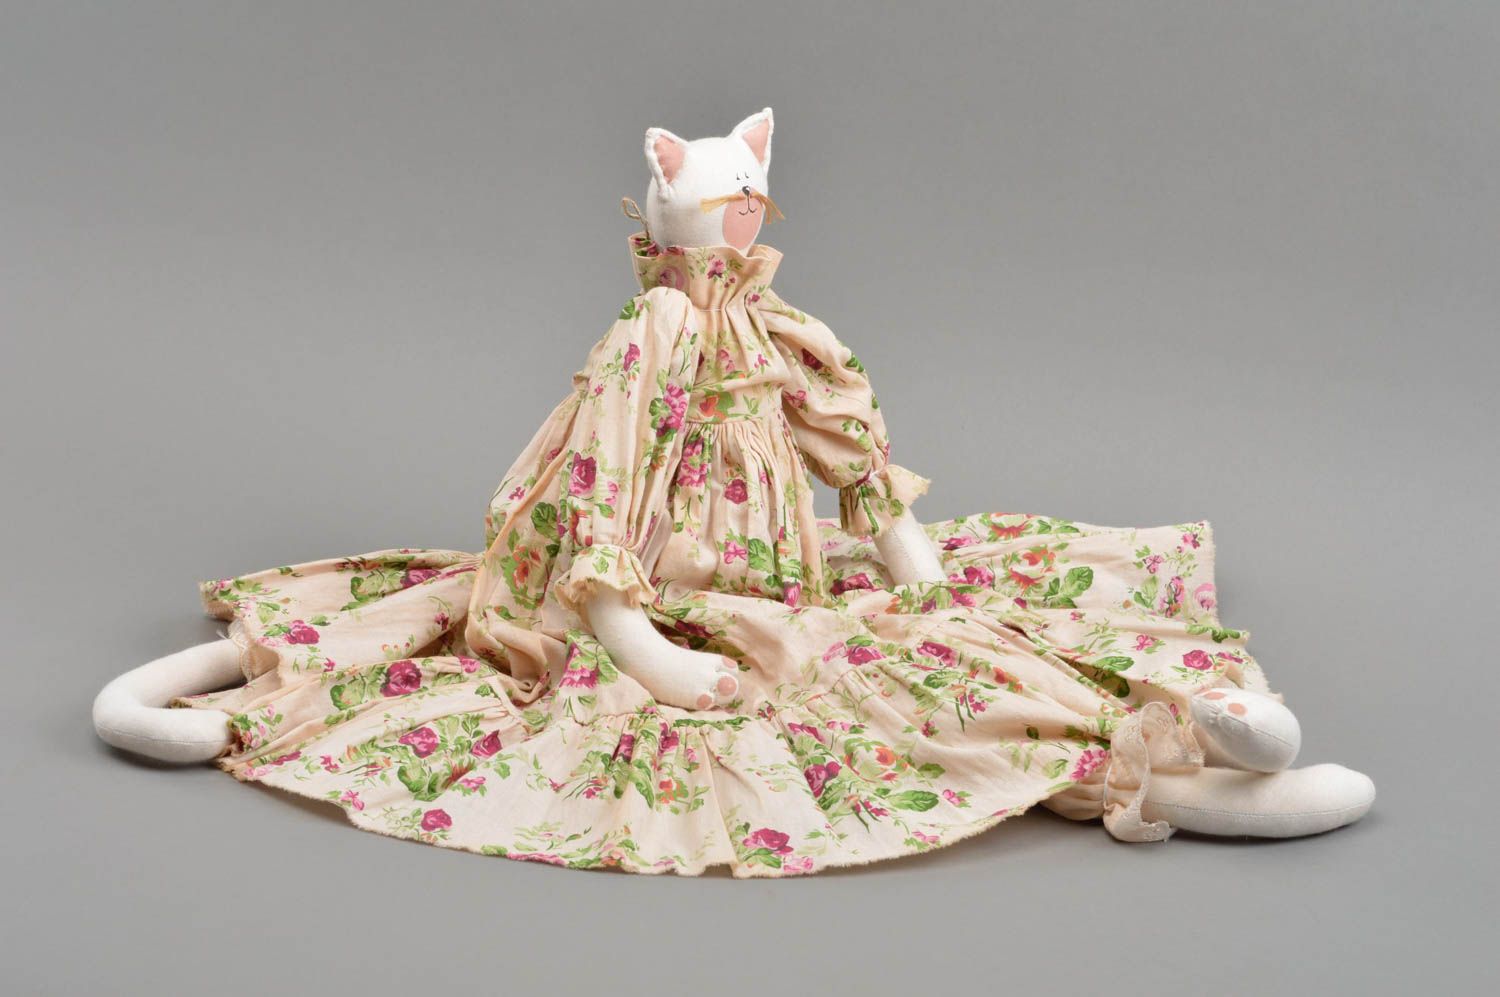 Fabric toy cat white stuffed toy doll in dress interior decor ideas nursery idea photo 4